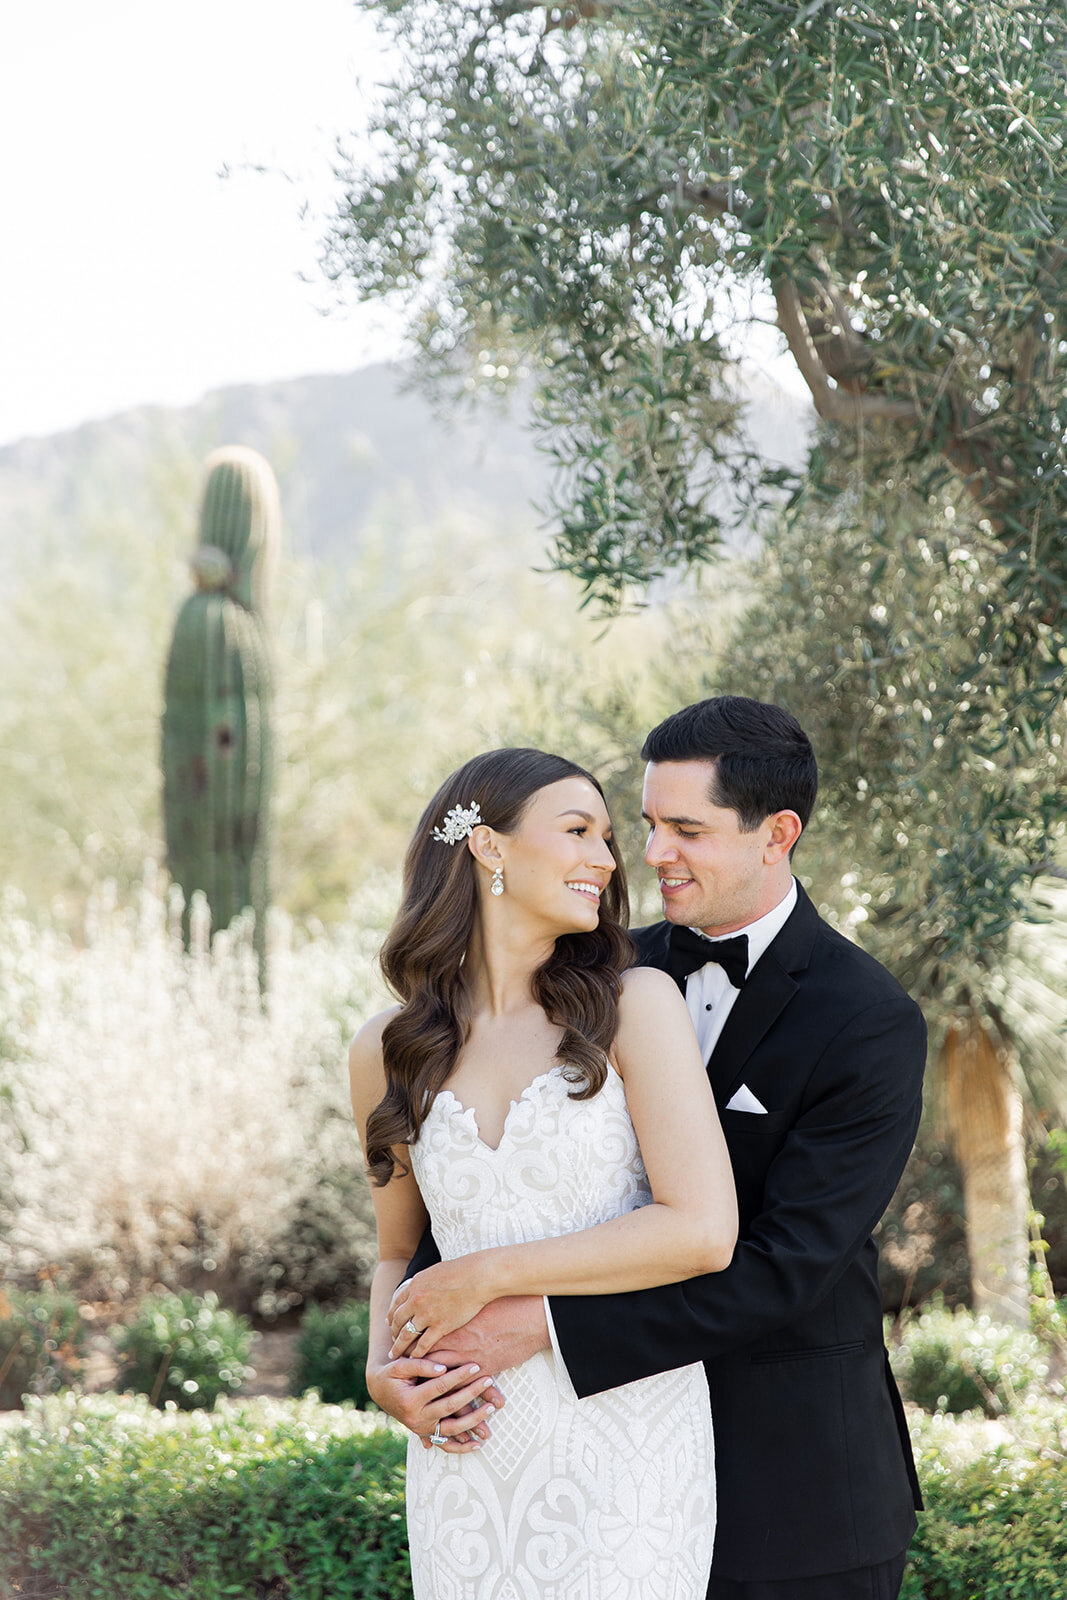 Karlie Colleen Photography - Hannah & Matt - El Chorro Wedding_ Paradise Valley Arizona - Revel Wedding Company-89